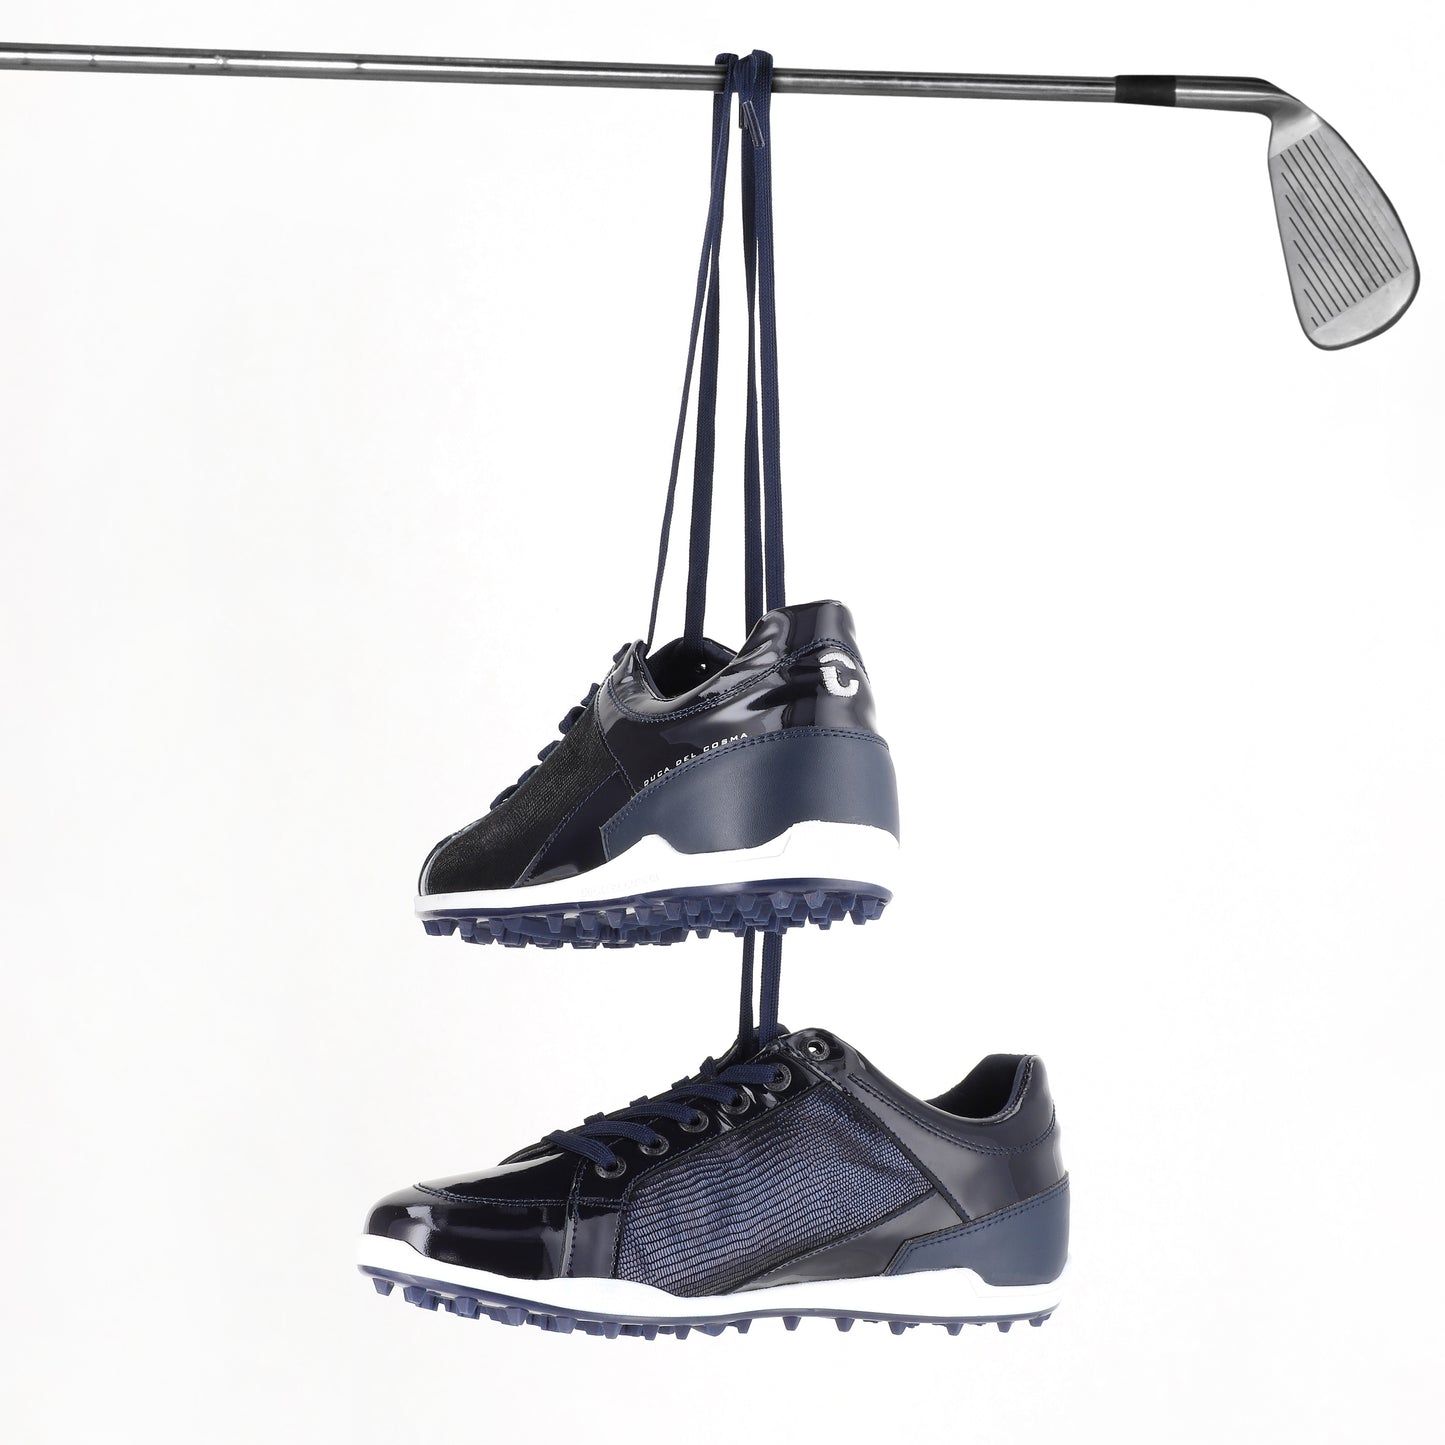 Waterproof caldes blue women's golf shoes from duca del cosma